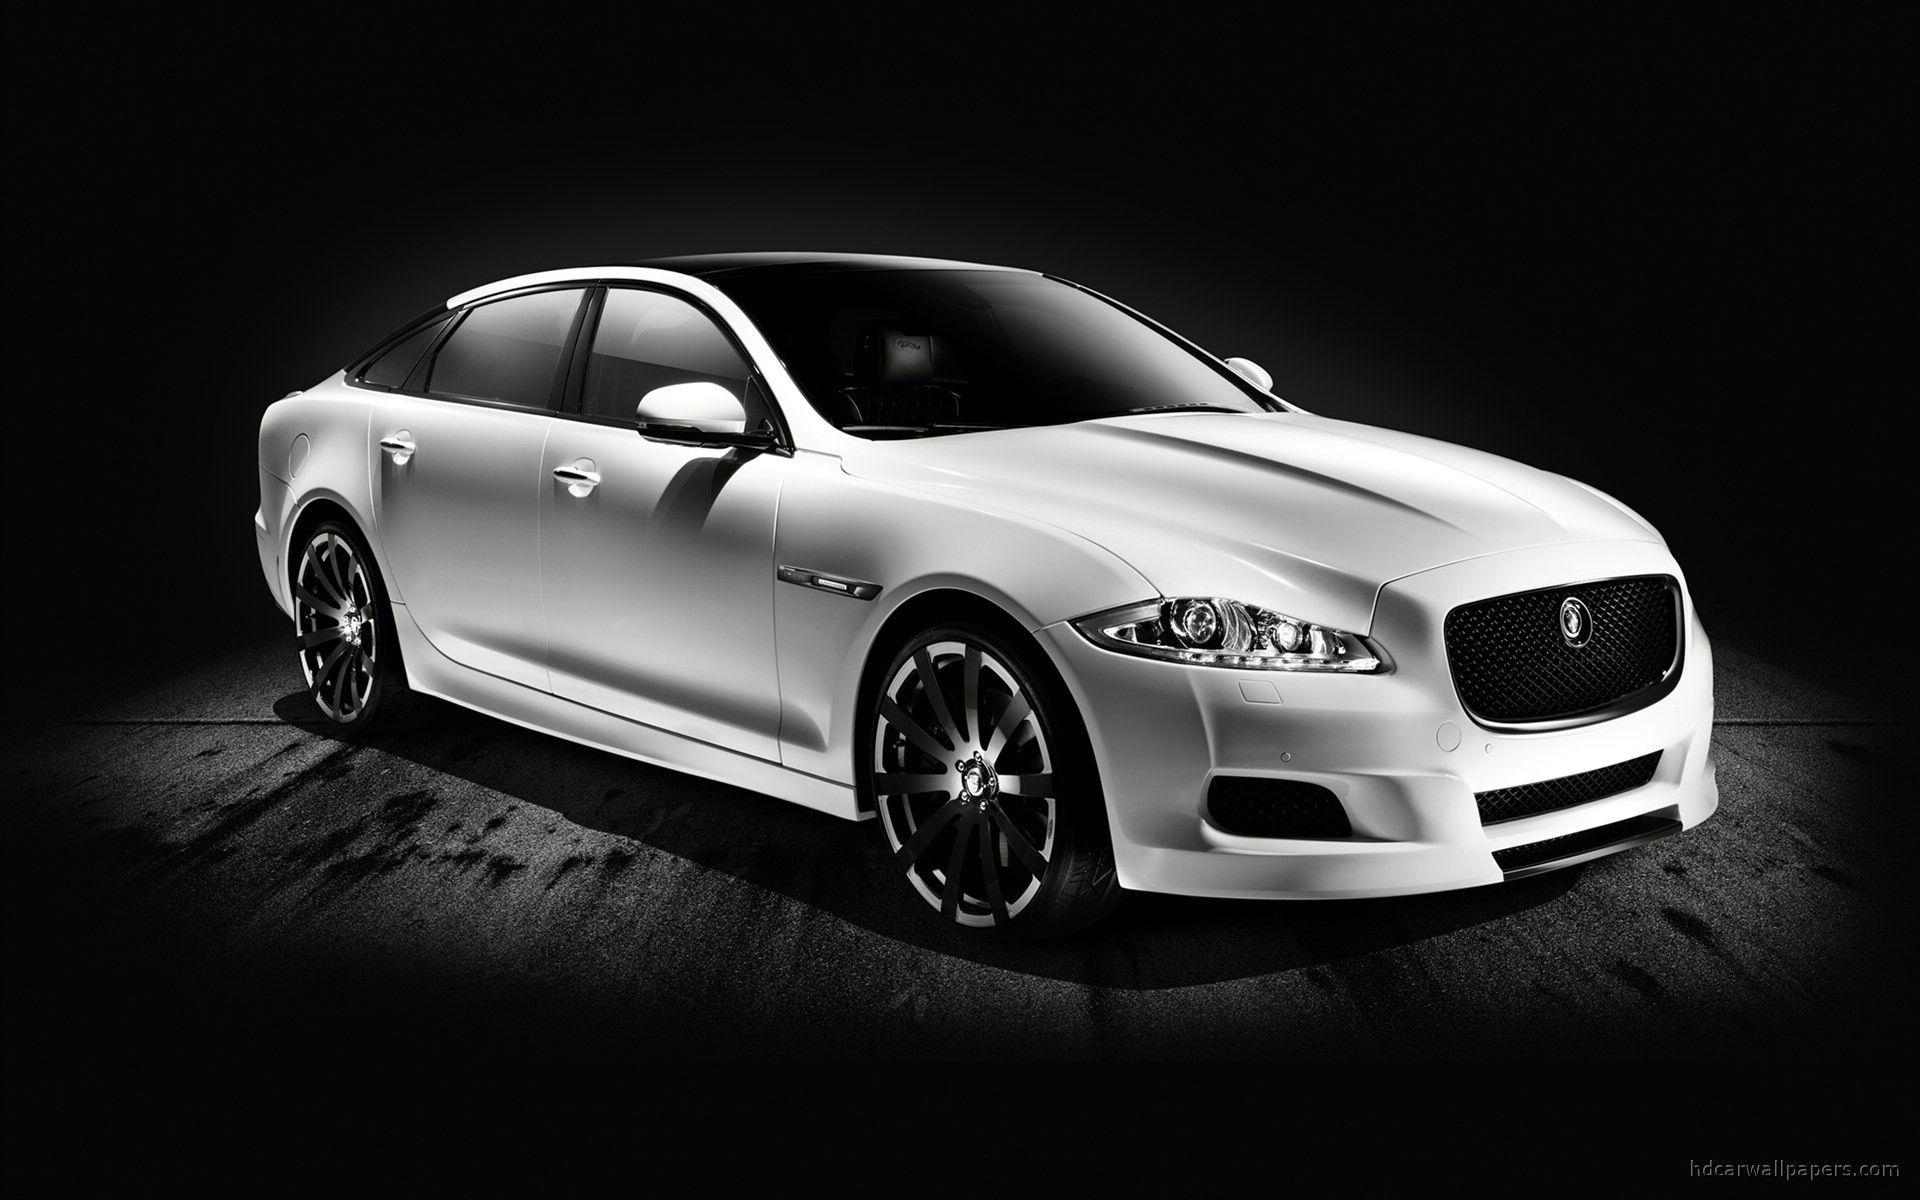 Download Jaguar Car Full HD Wallpaper Desktop Image About For Cars